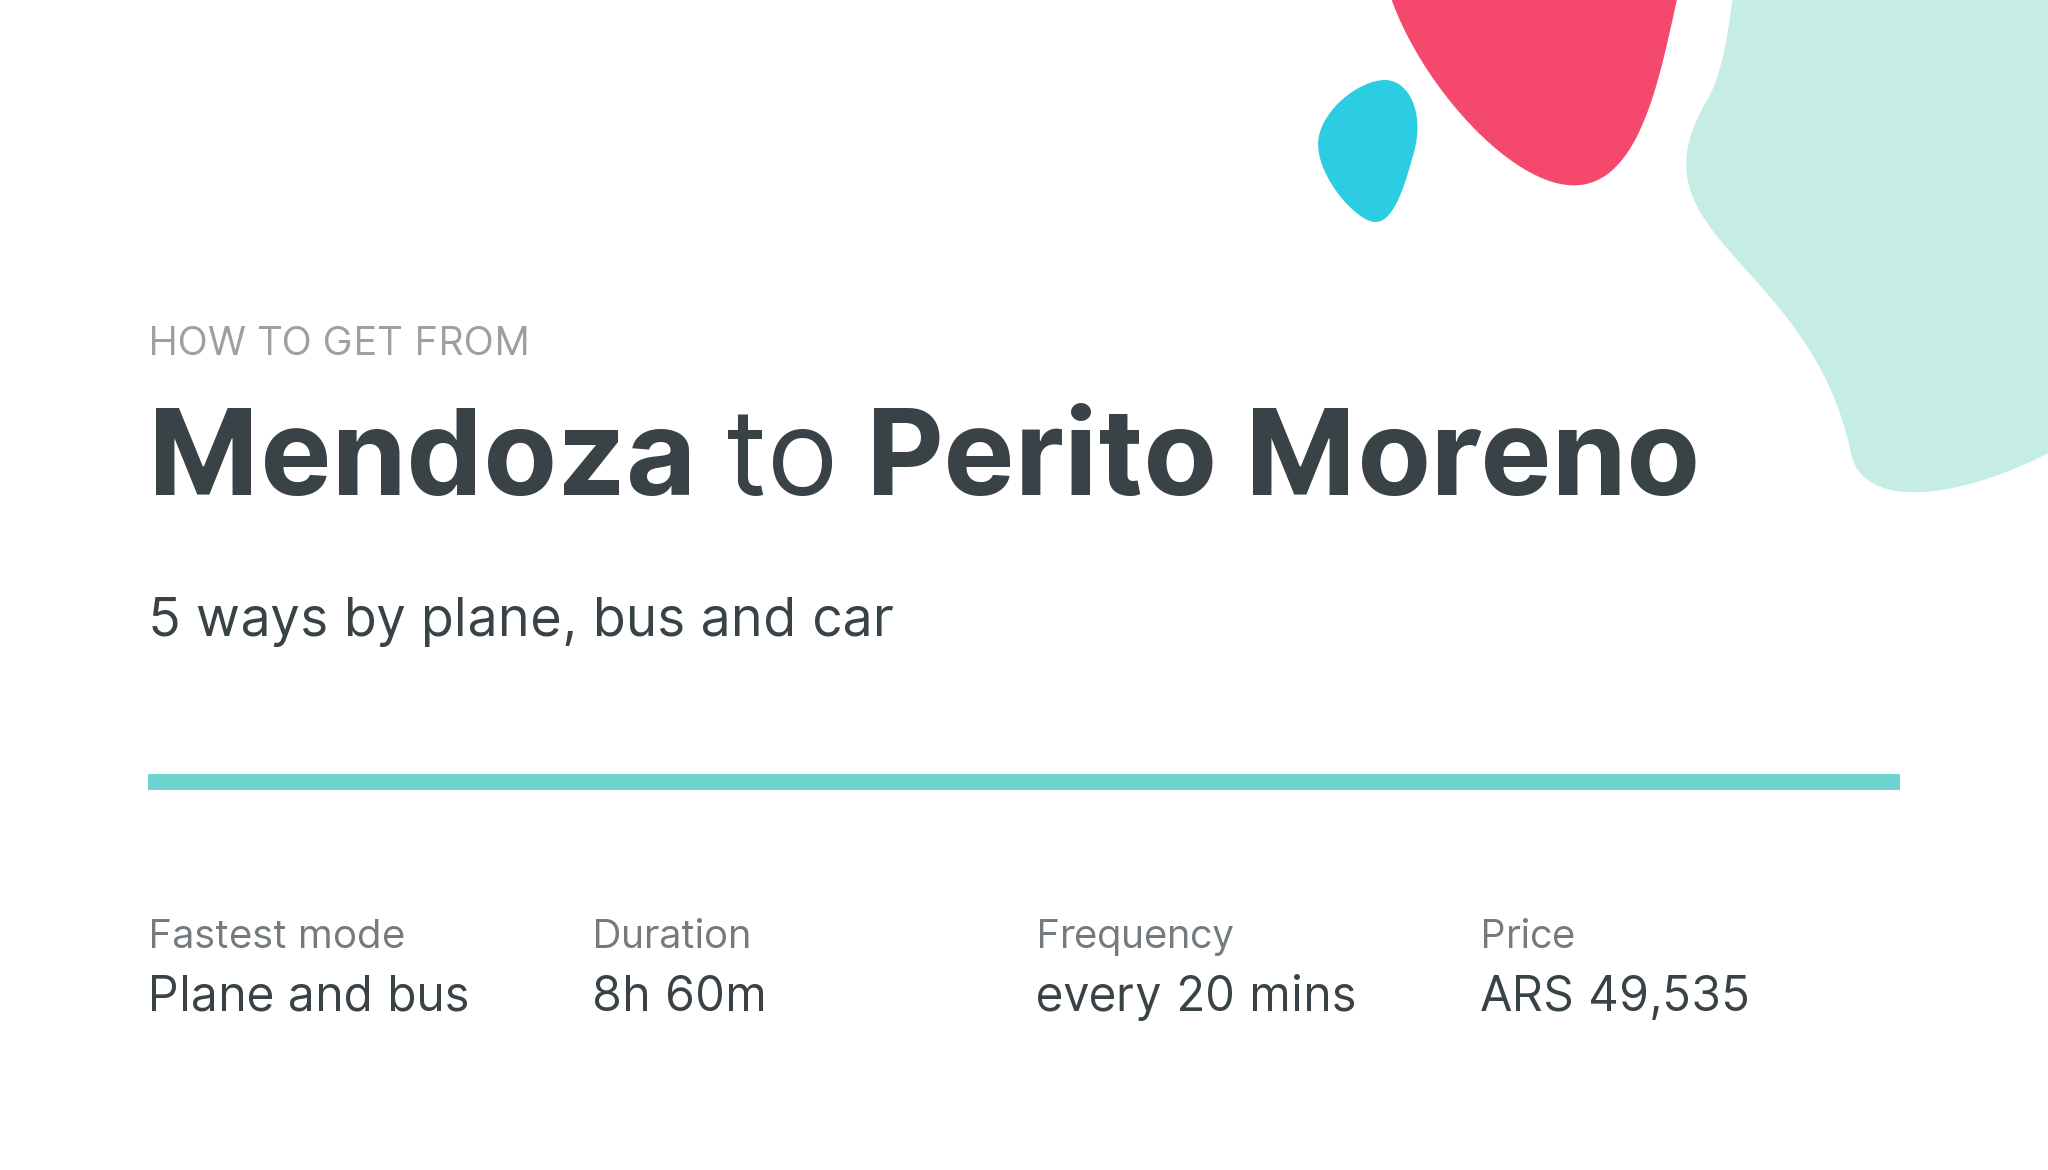 How do I get from Mendoza to Perito Moreno